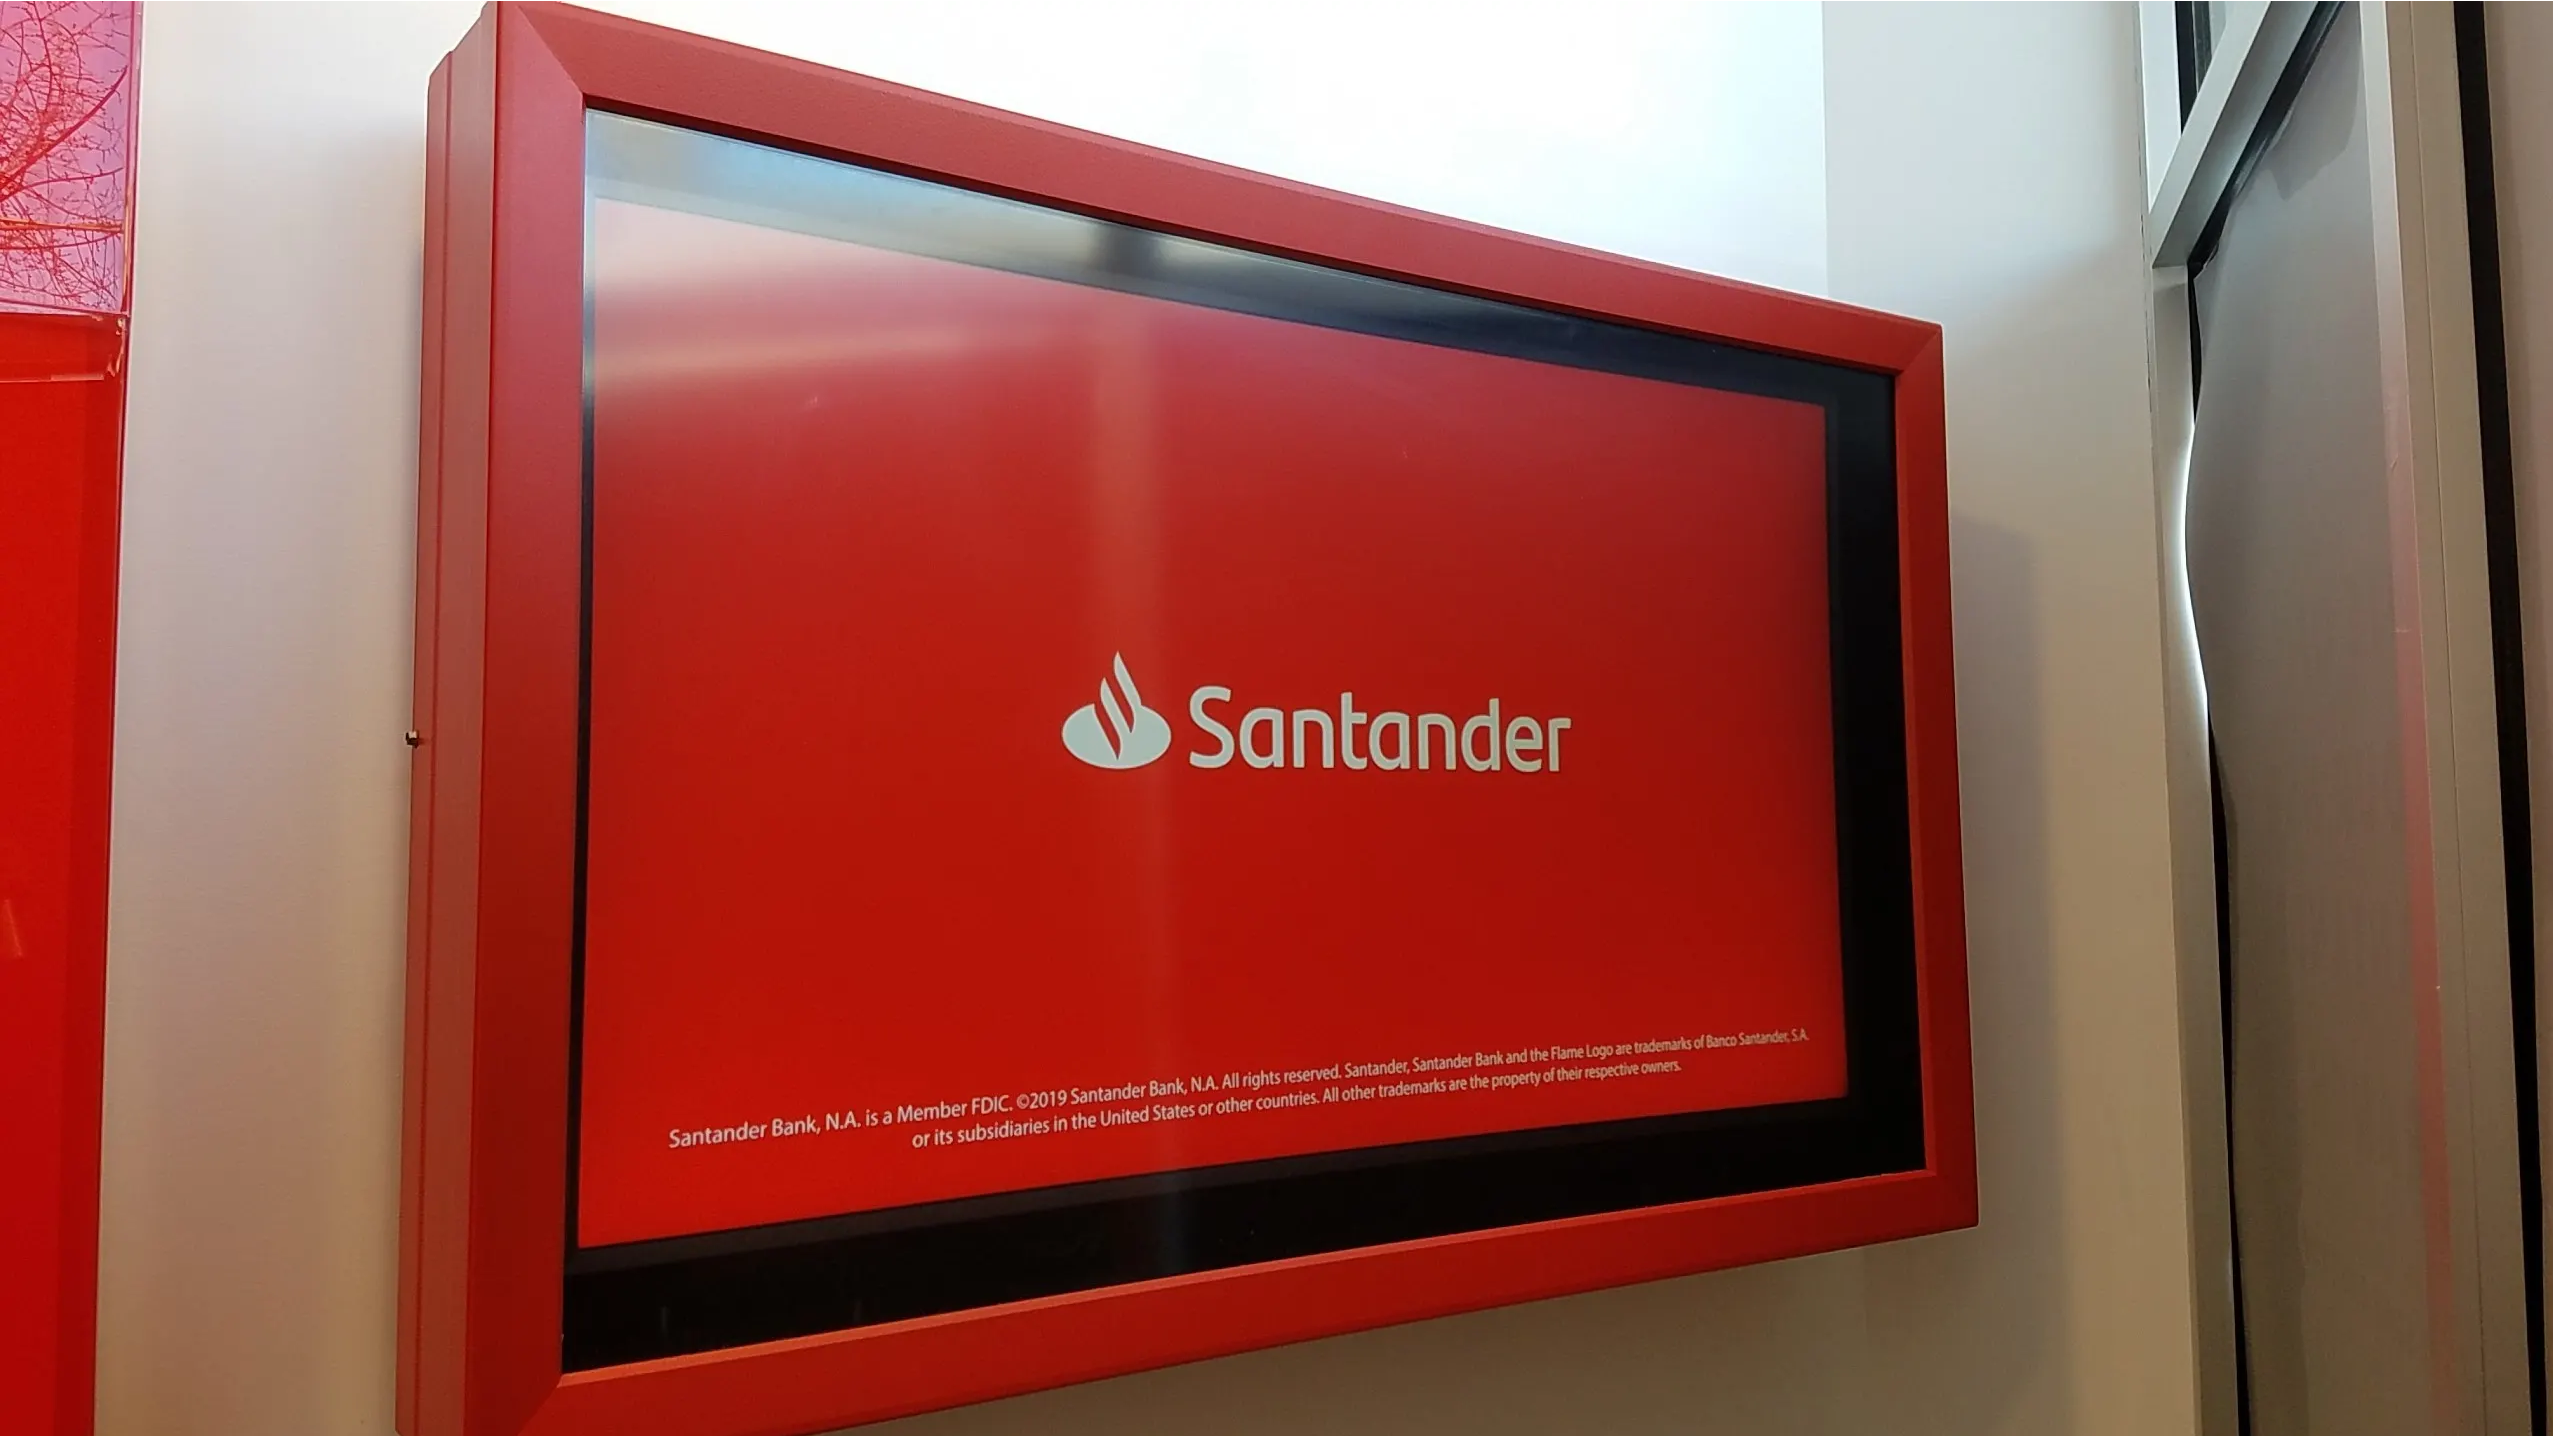 Indoor TV enclosure red The TV Shield PRO TV screen protection at Santander bank